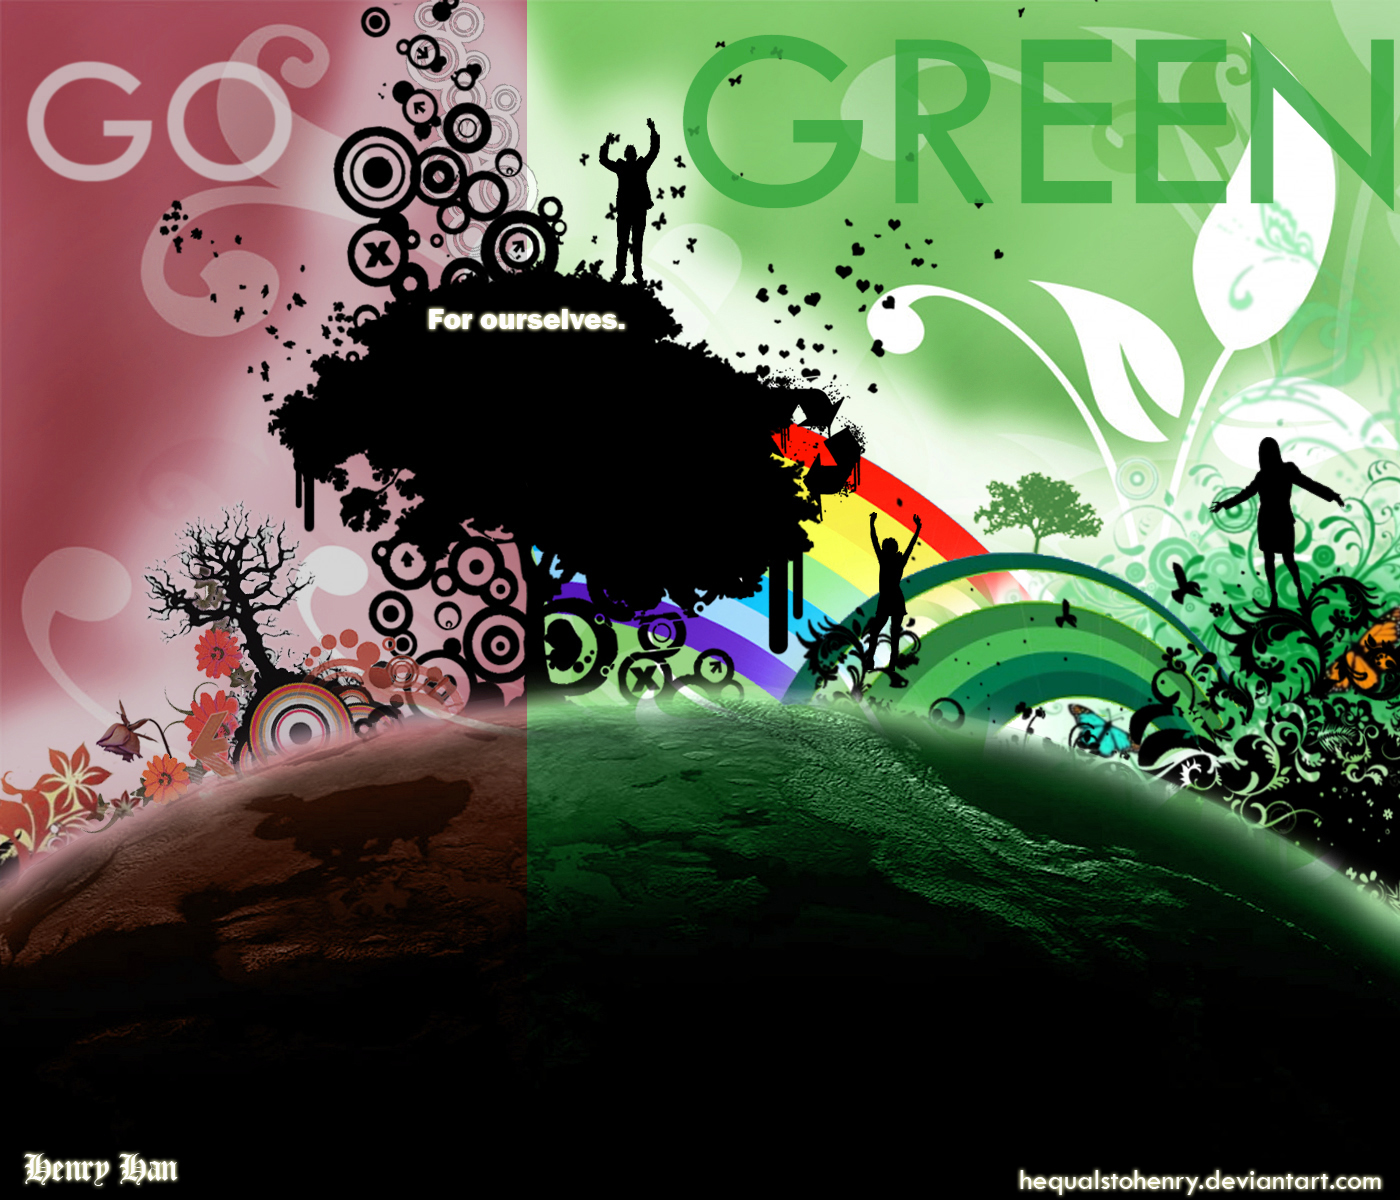 Go Green Initiative - Helping the World Go Green